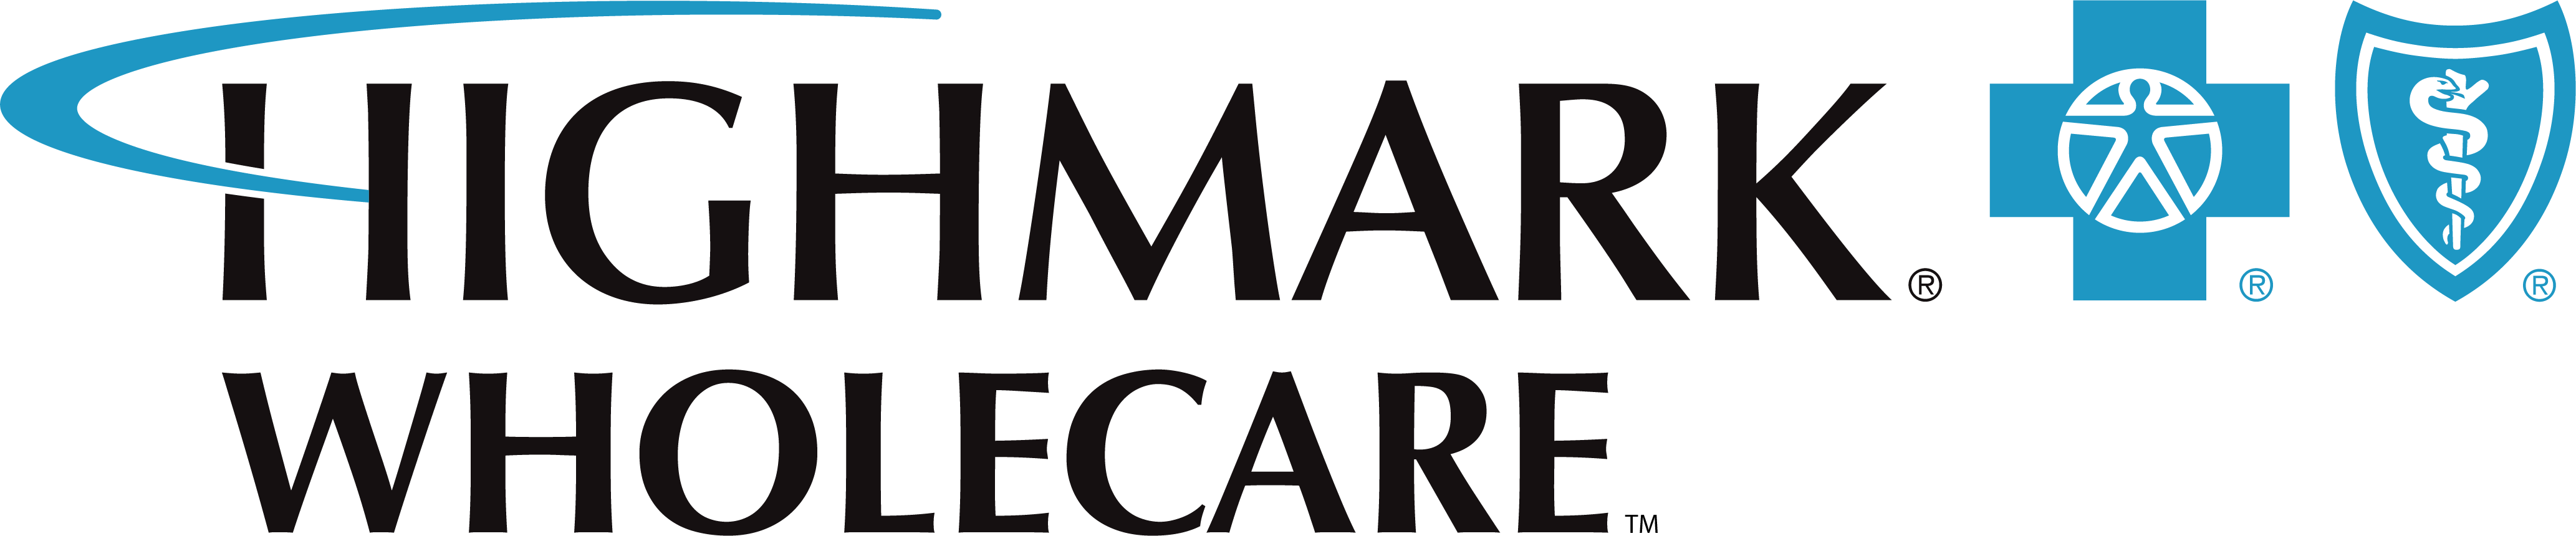 highmark wholecare logo